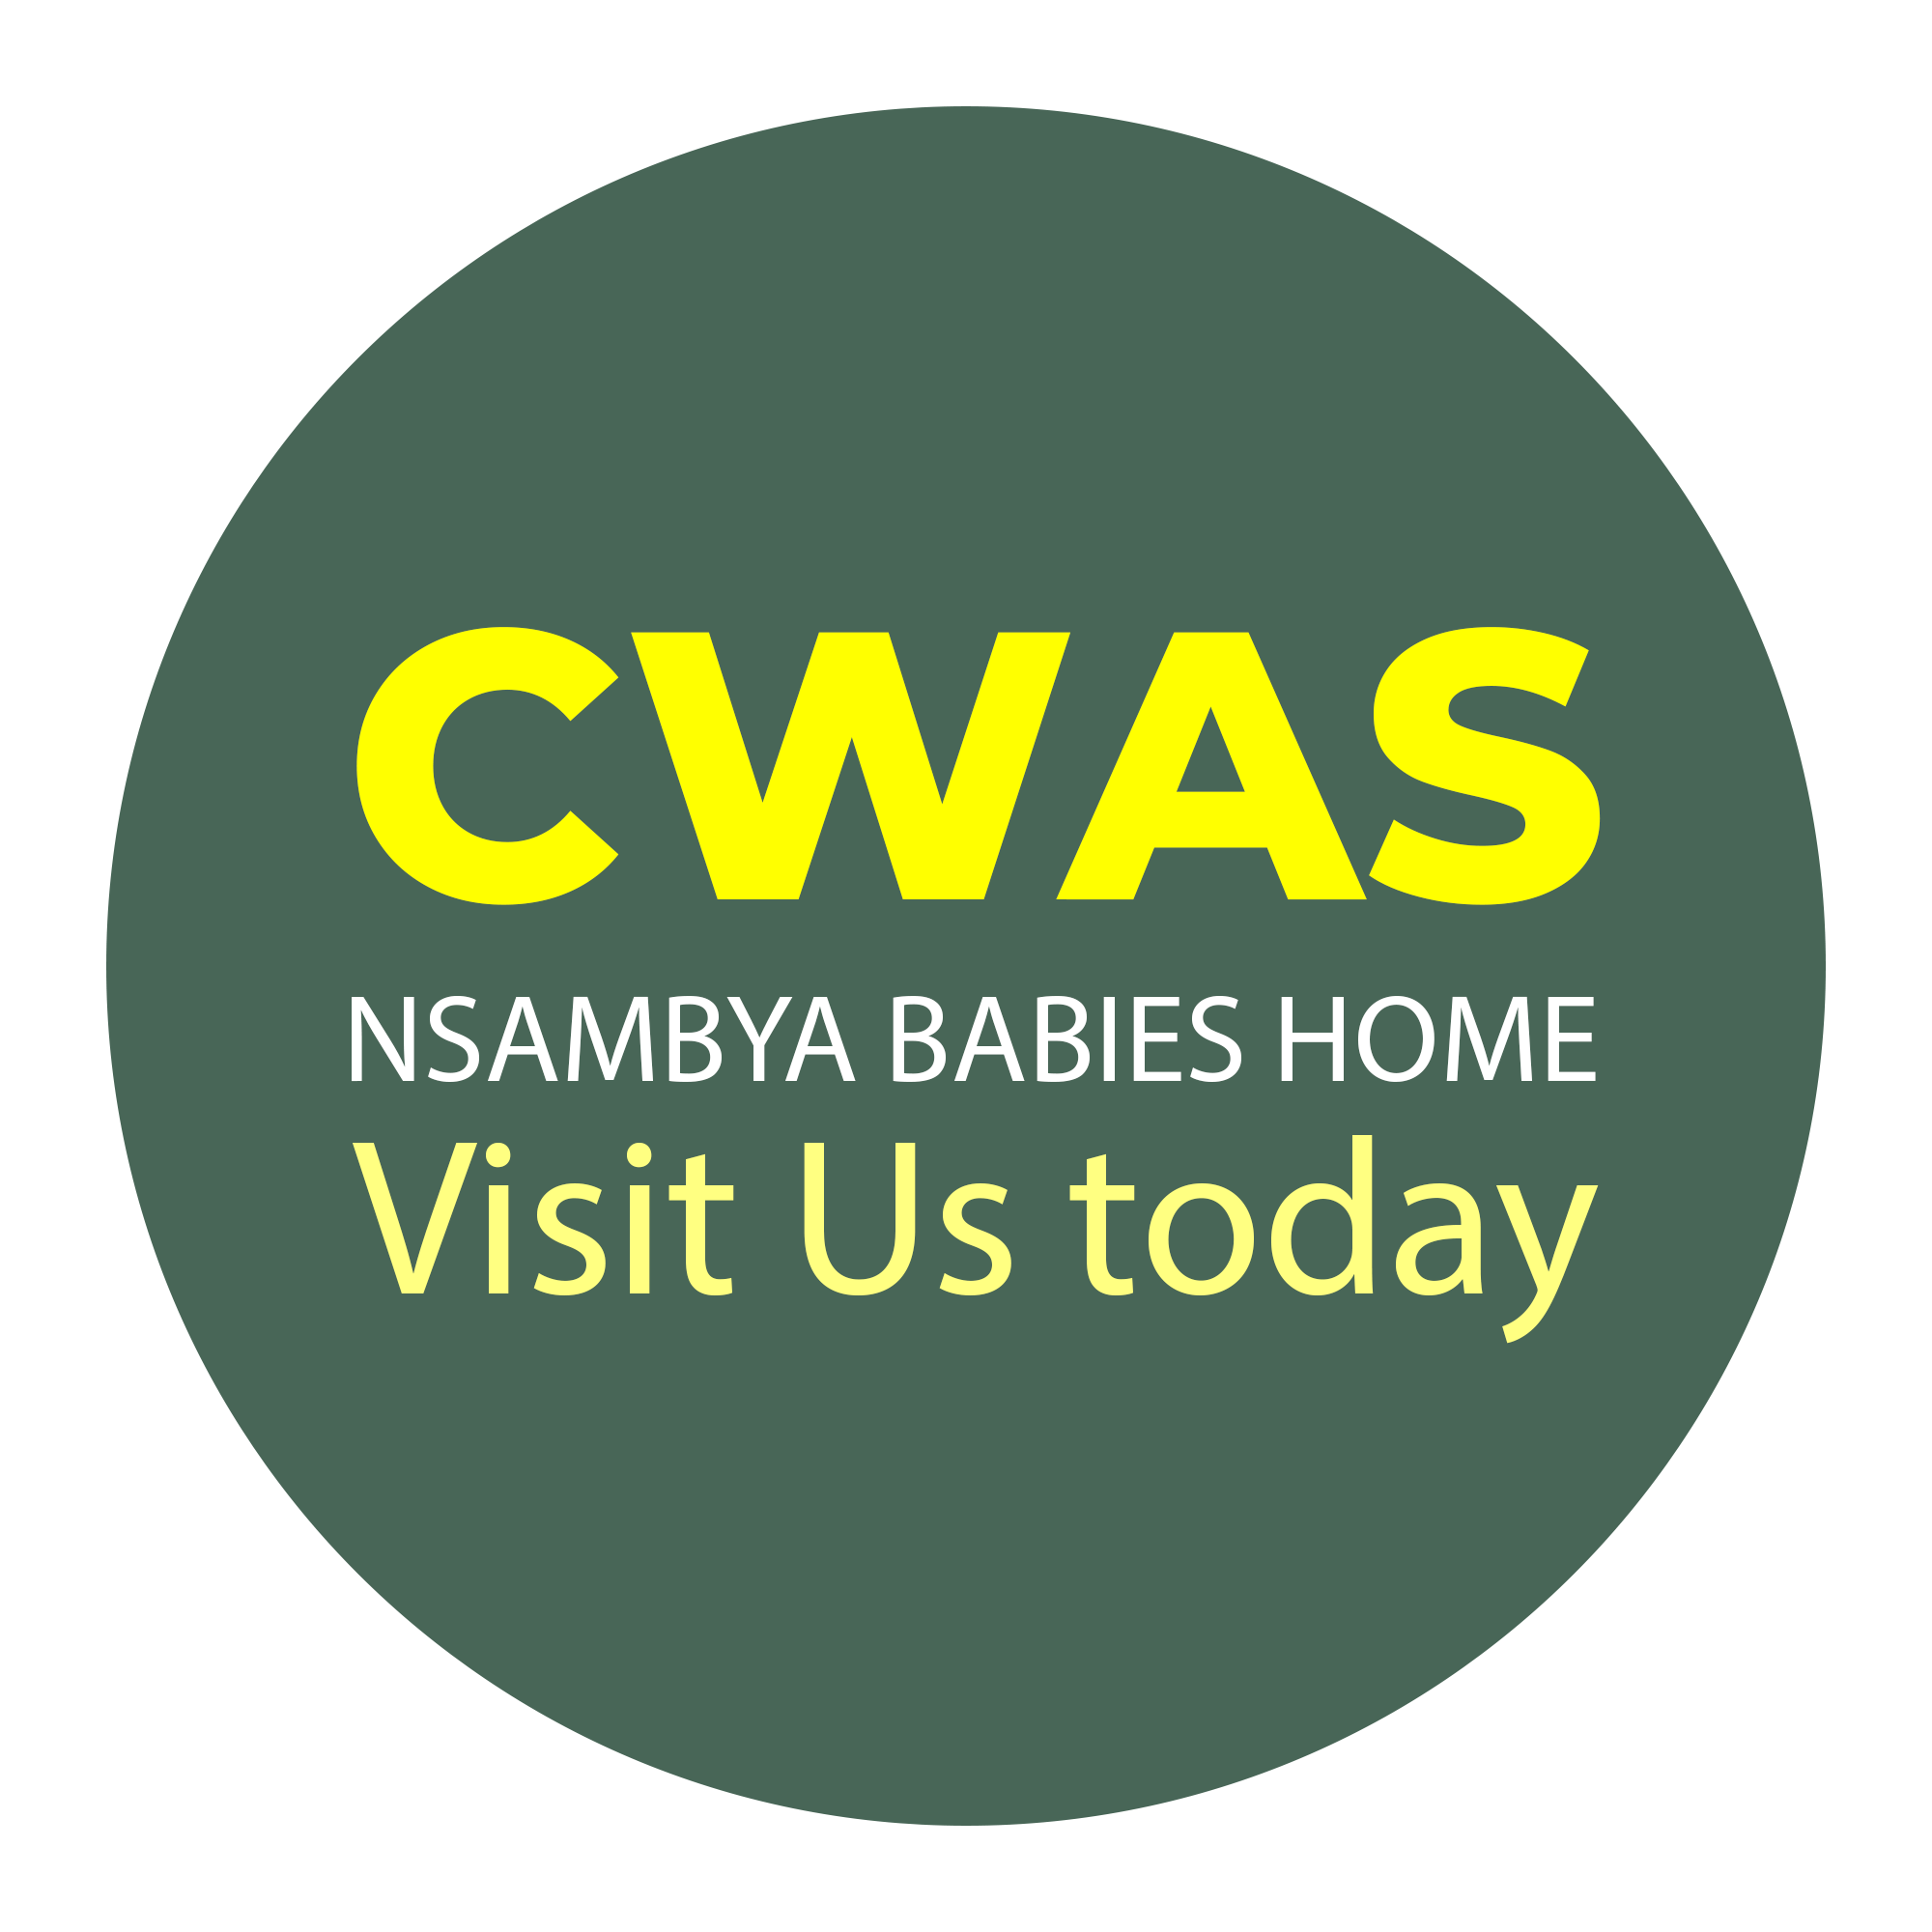 CWAS Nsambya Babies Home